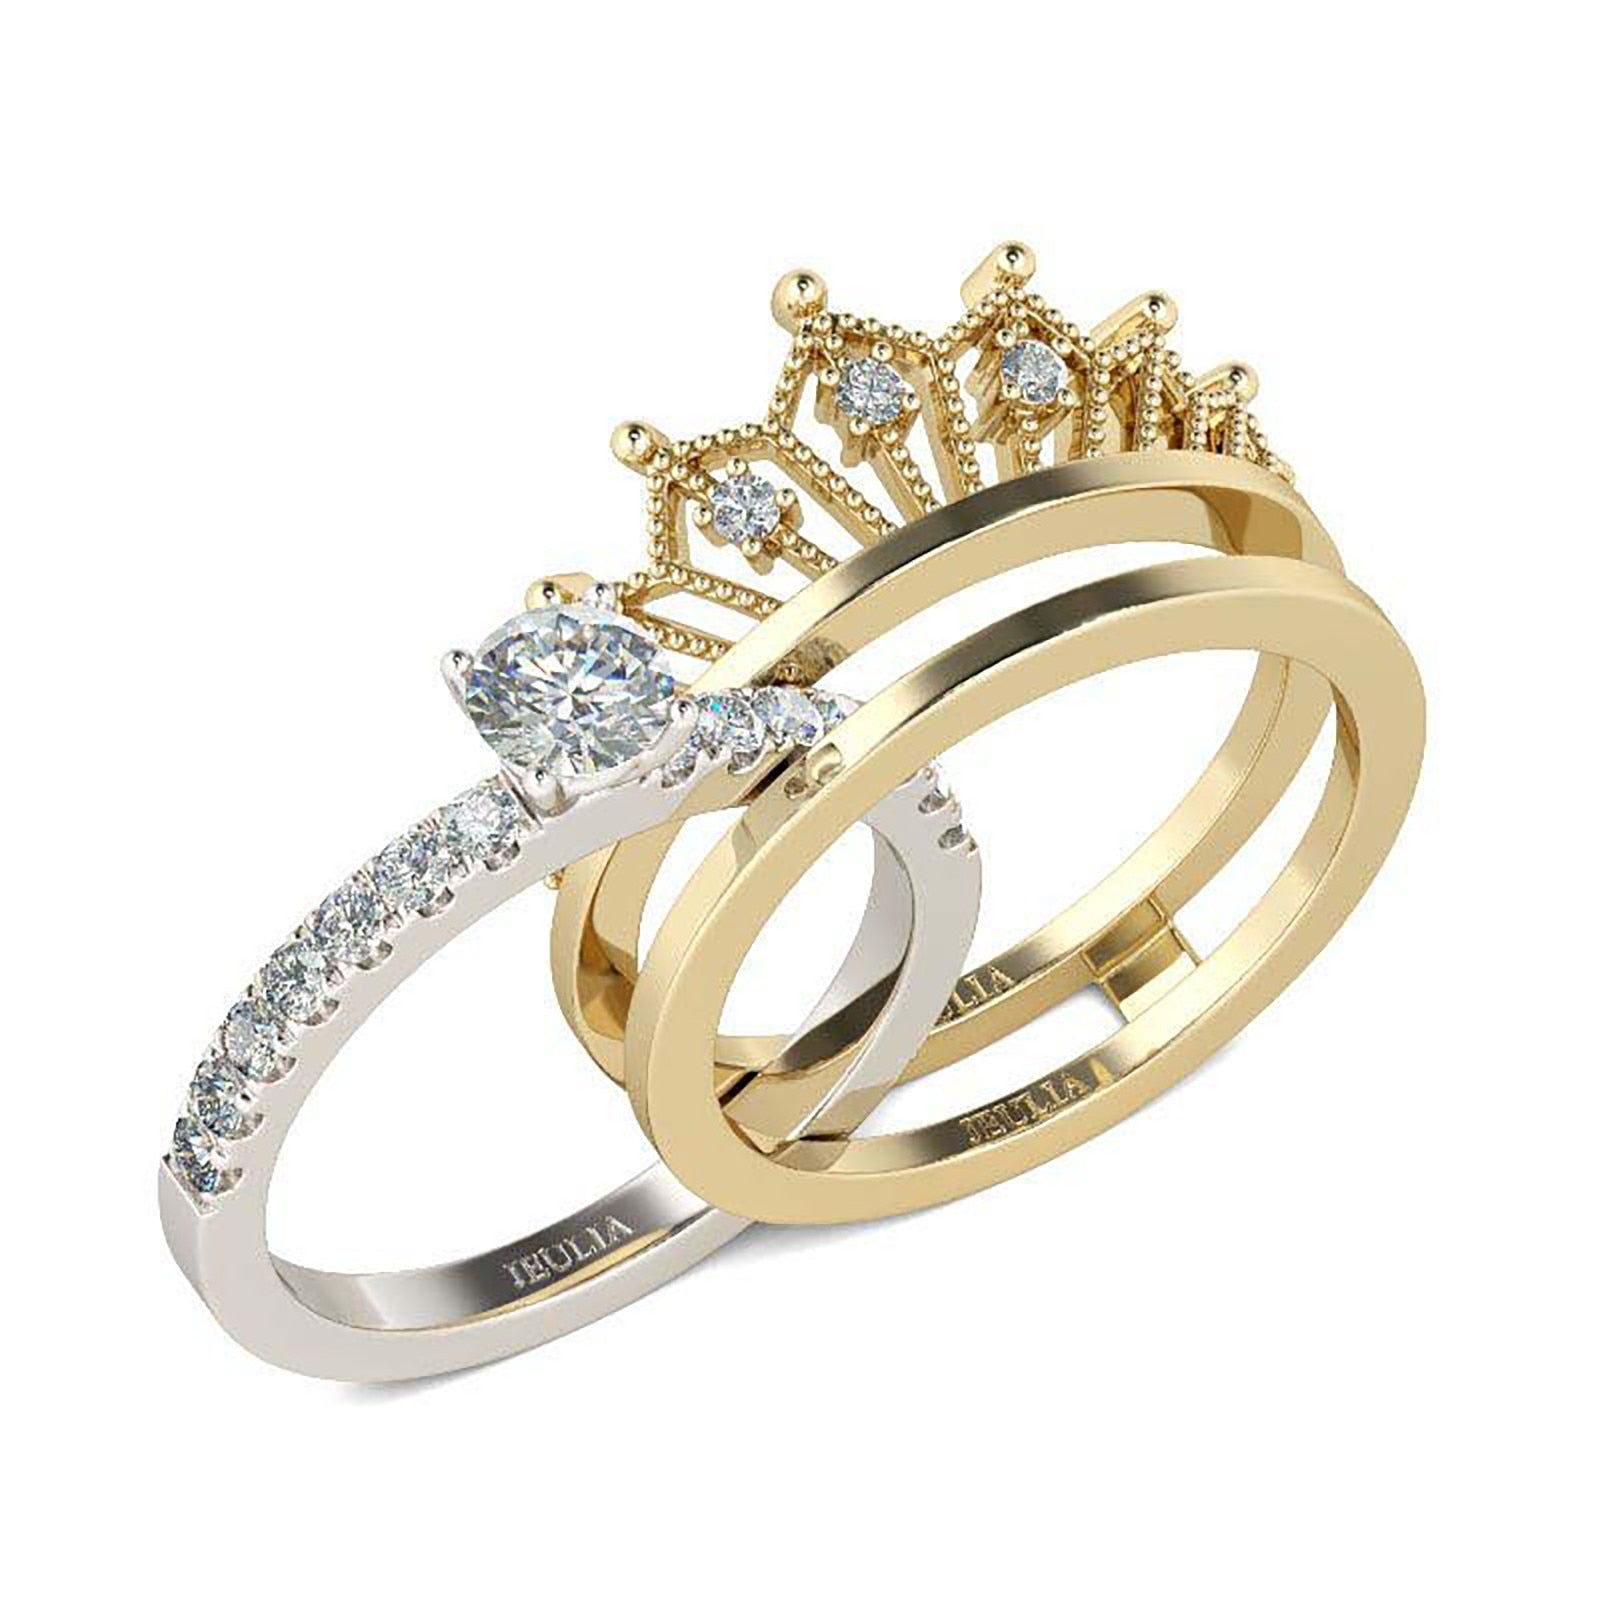 Anel Coroa de Princesa - Princess Crown - JokoStore - O ponto de encontro para ofertas incríveis